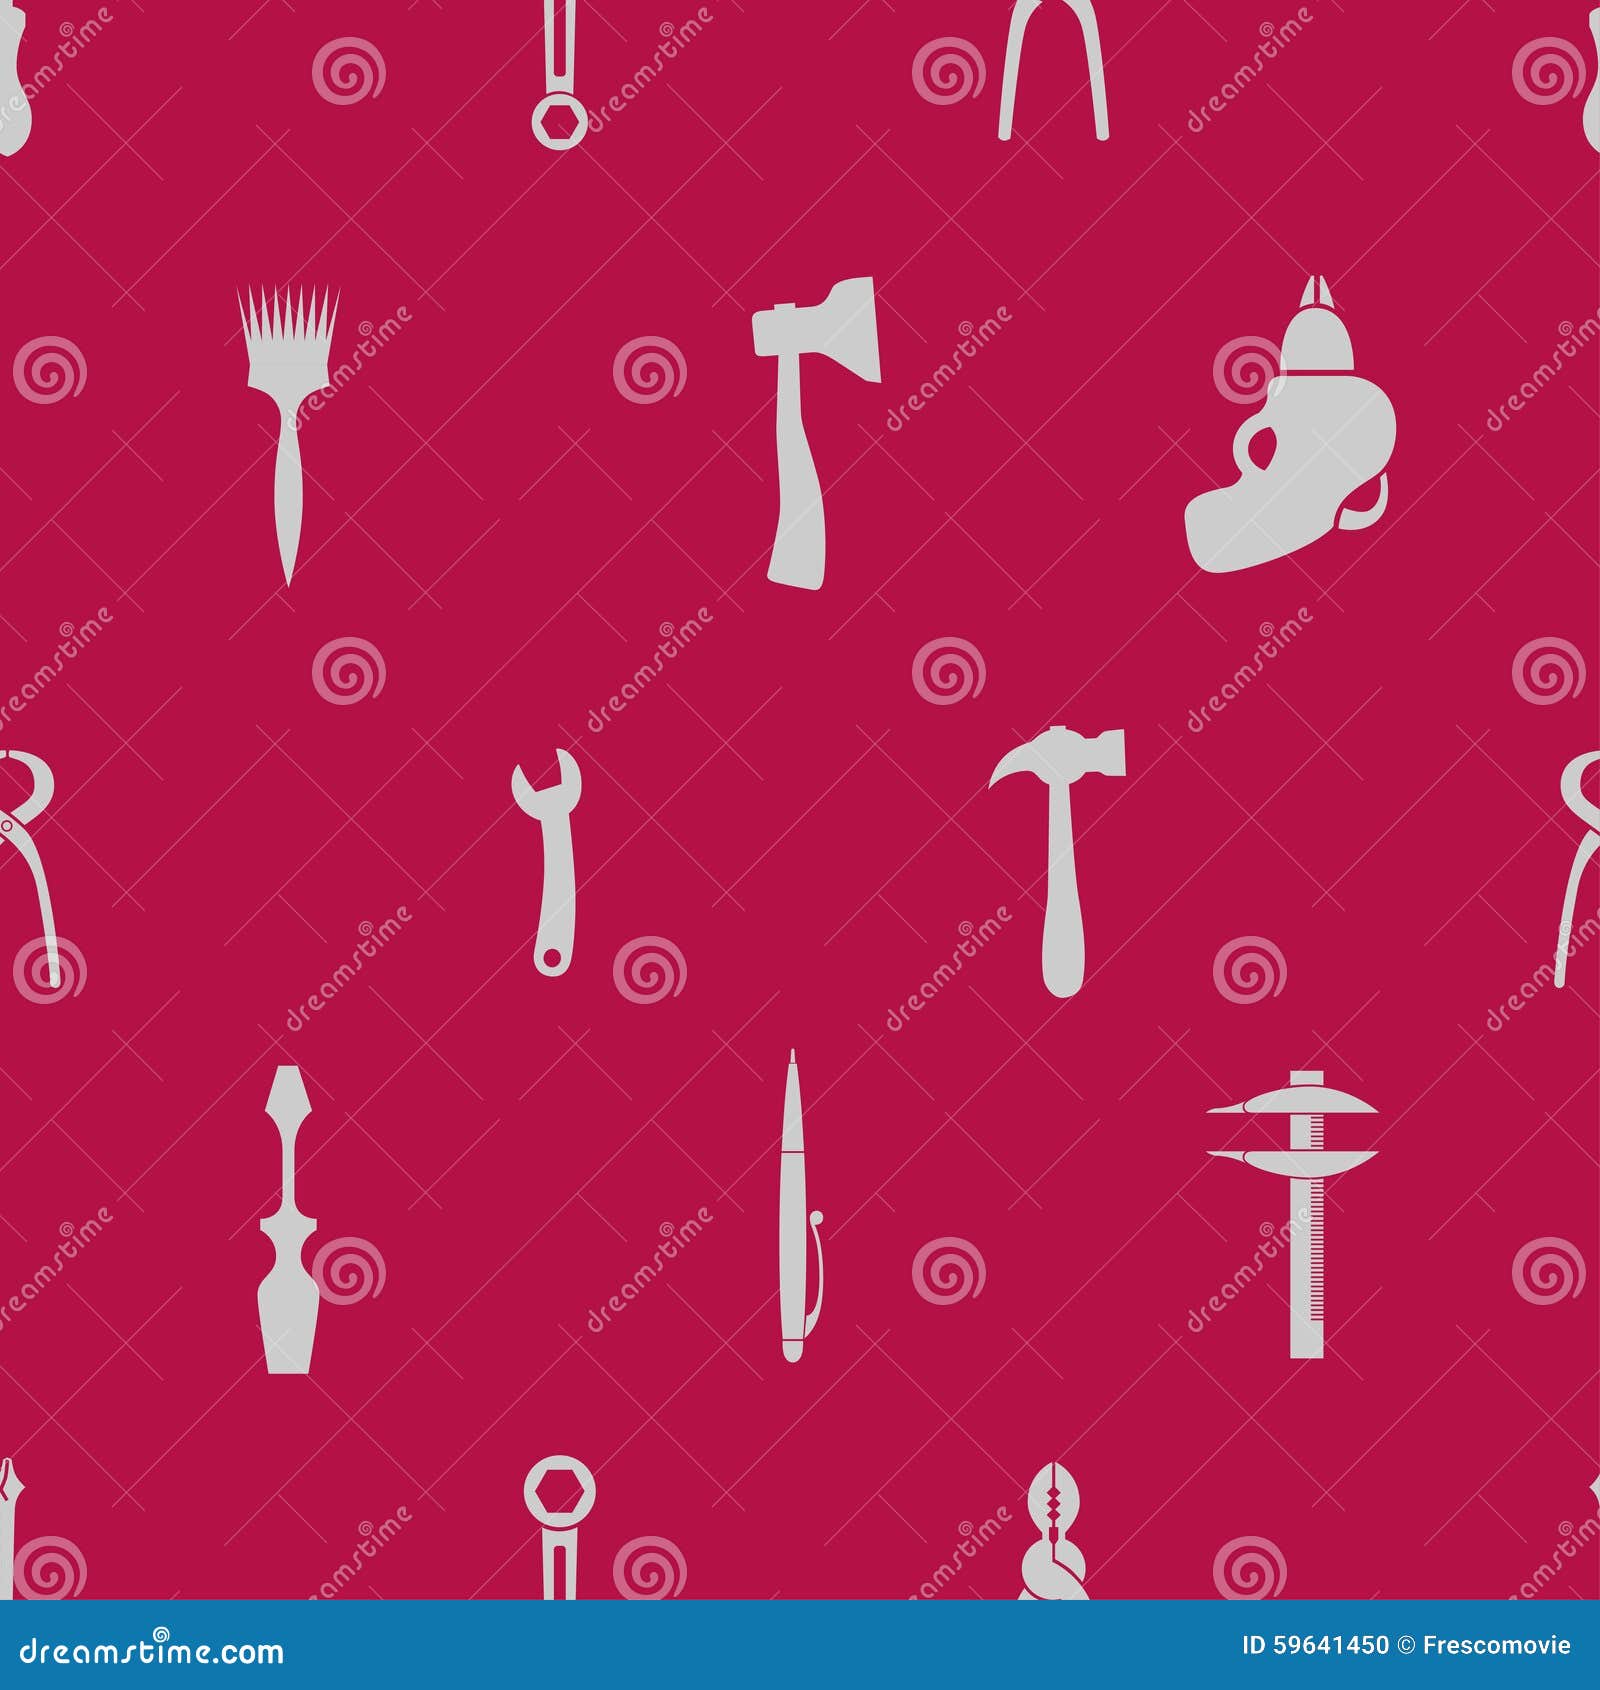 Tools pattern stock vector. Illustration of texture, technology - 59641450